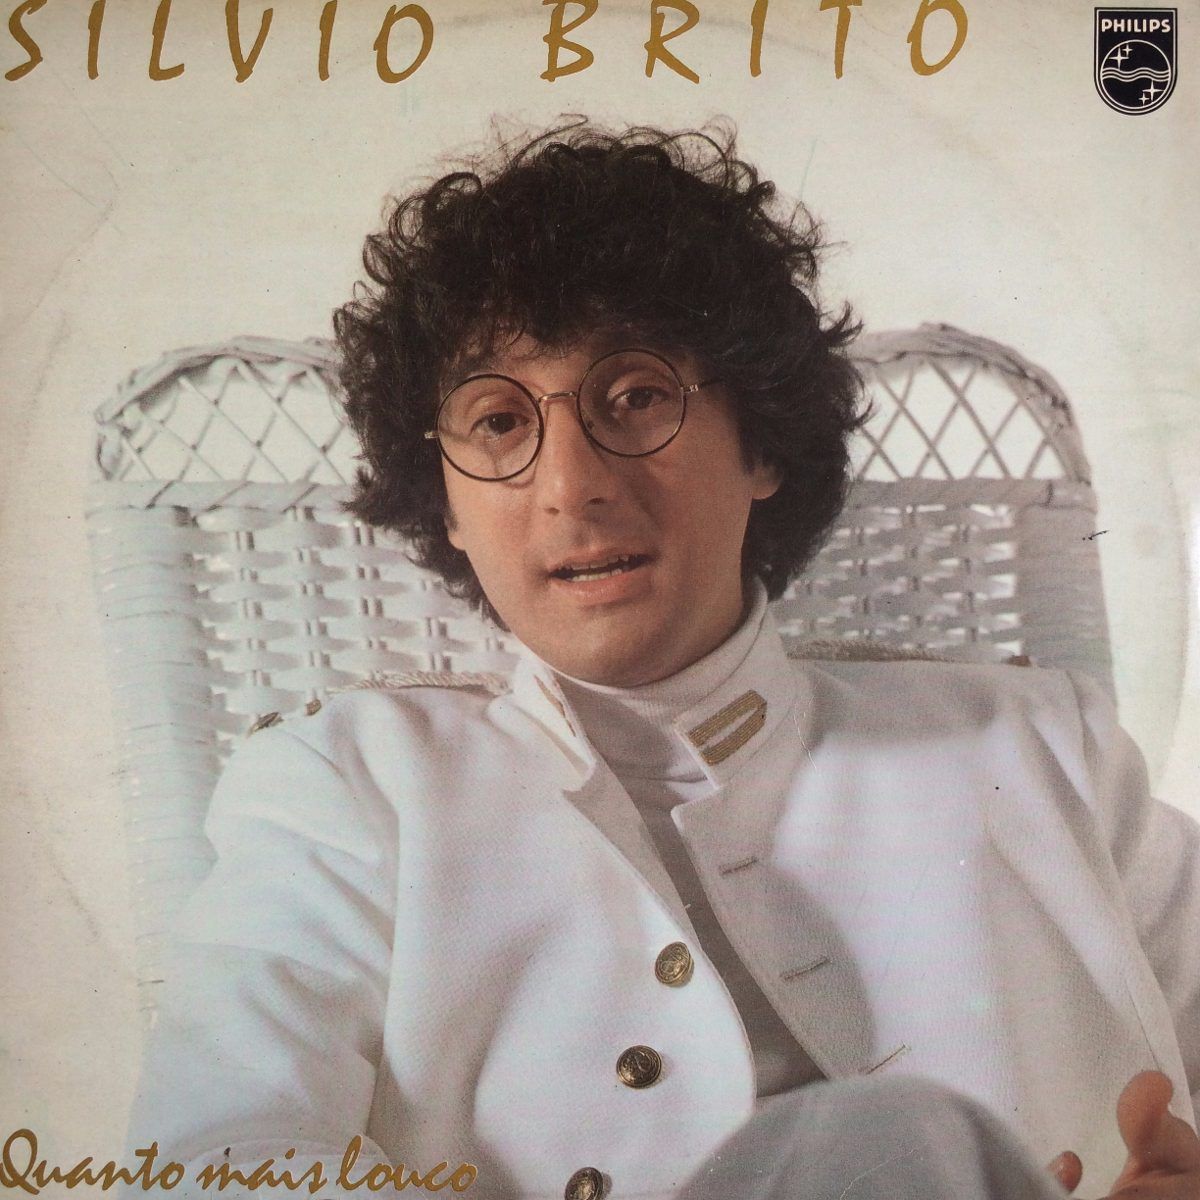 SILVIO BRITO - QUANTO MAIS LOUCO (1979)